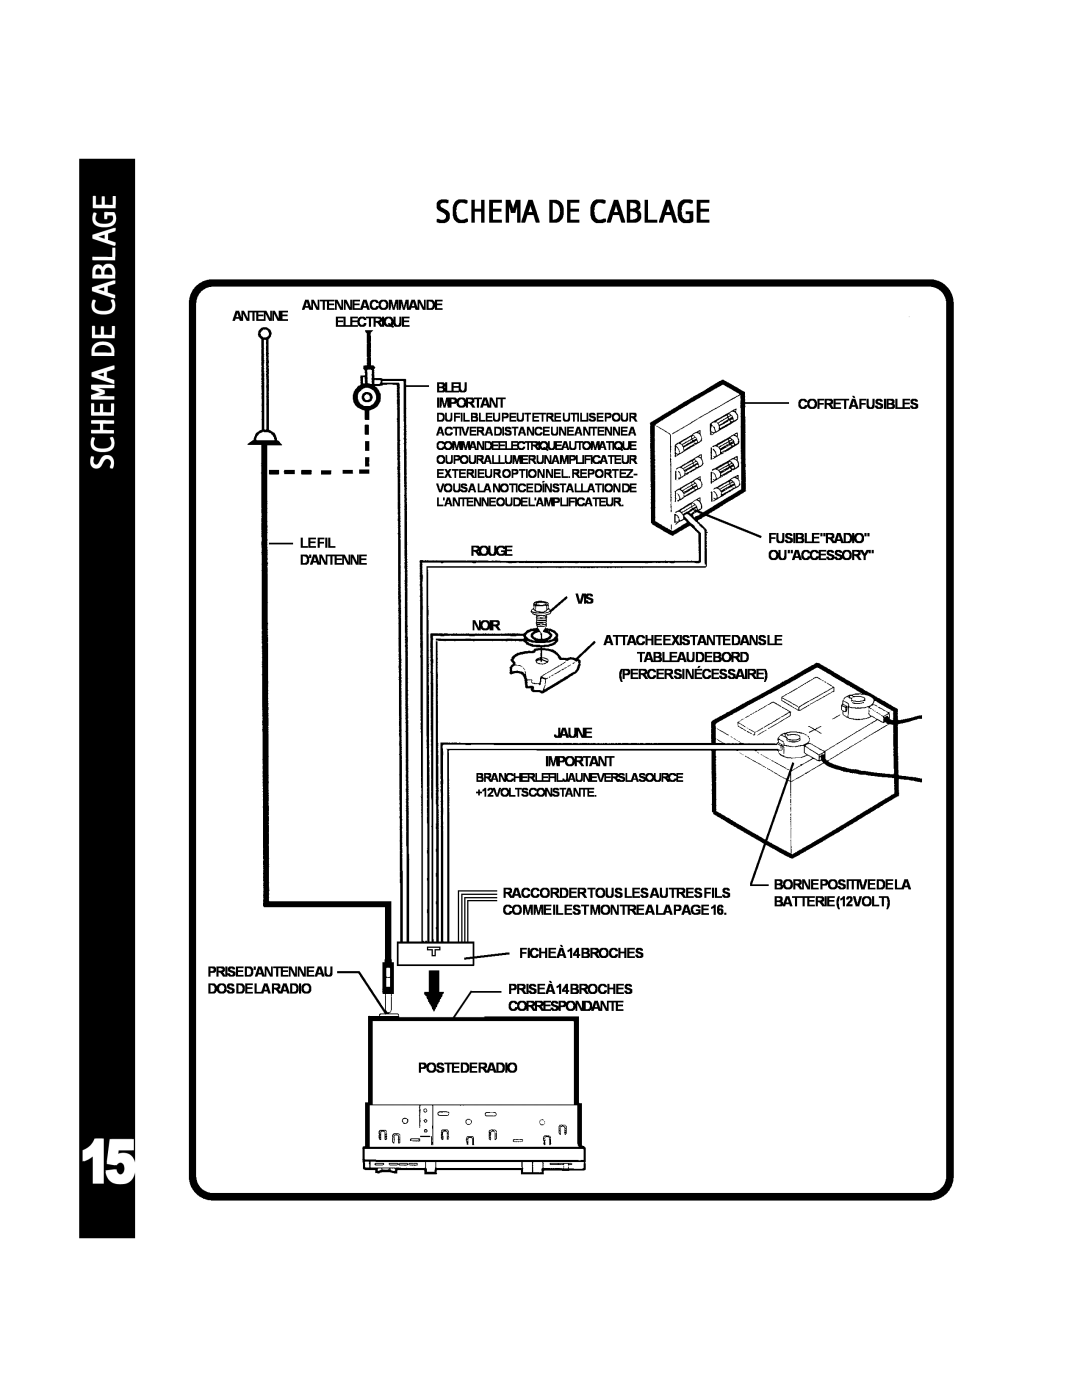 Audiovox ACD-25 manual Schema De Cablage 